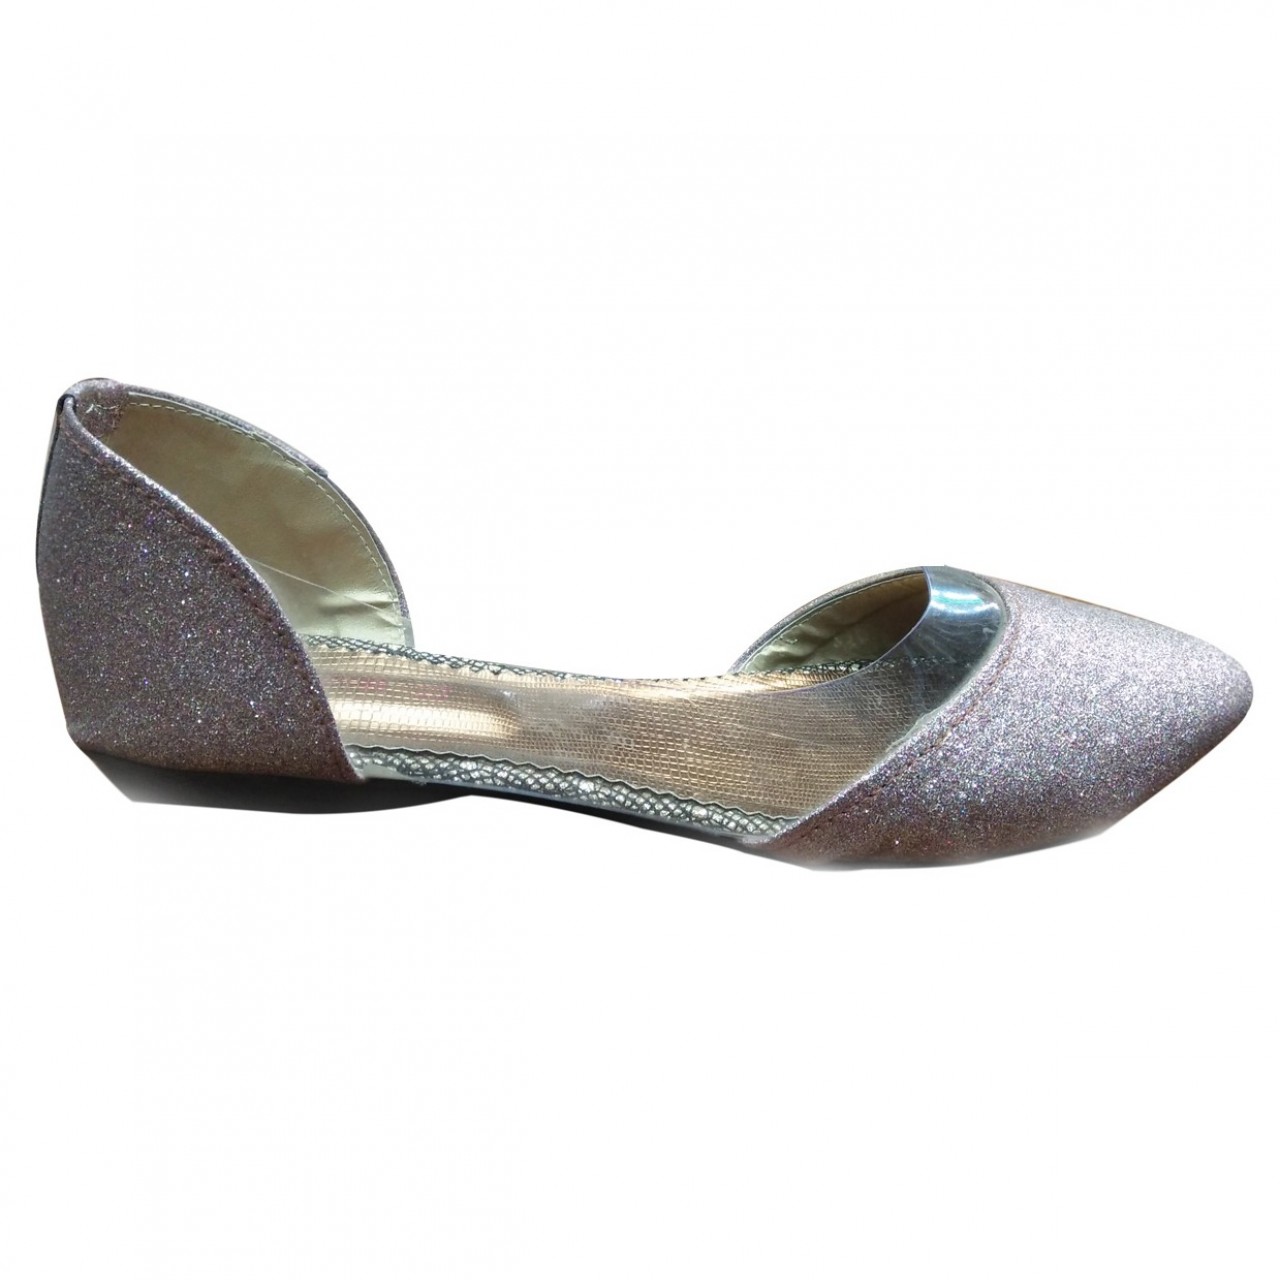 Fancy Partywear Broach Khussa Shoes For Women - Silver - 9 To 11